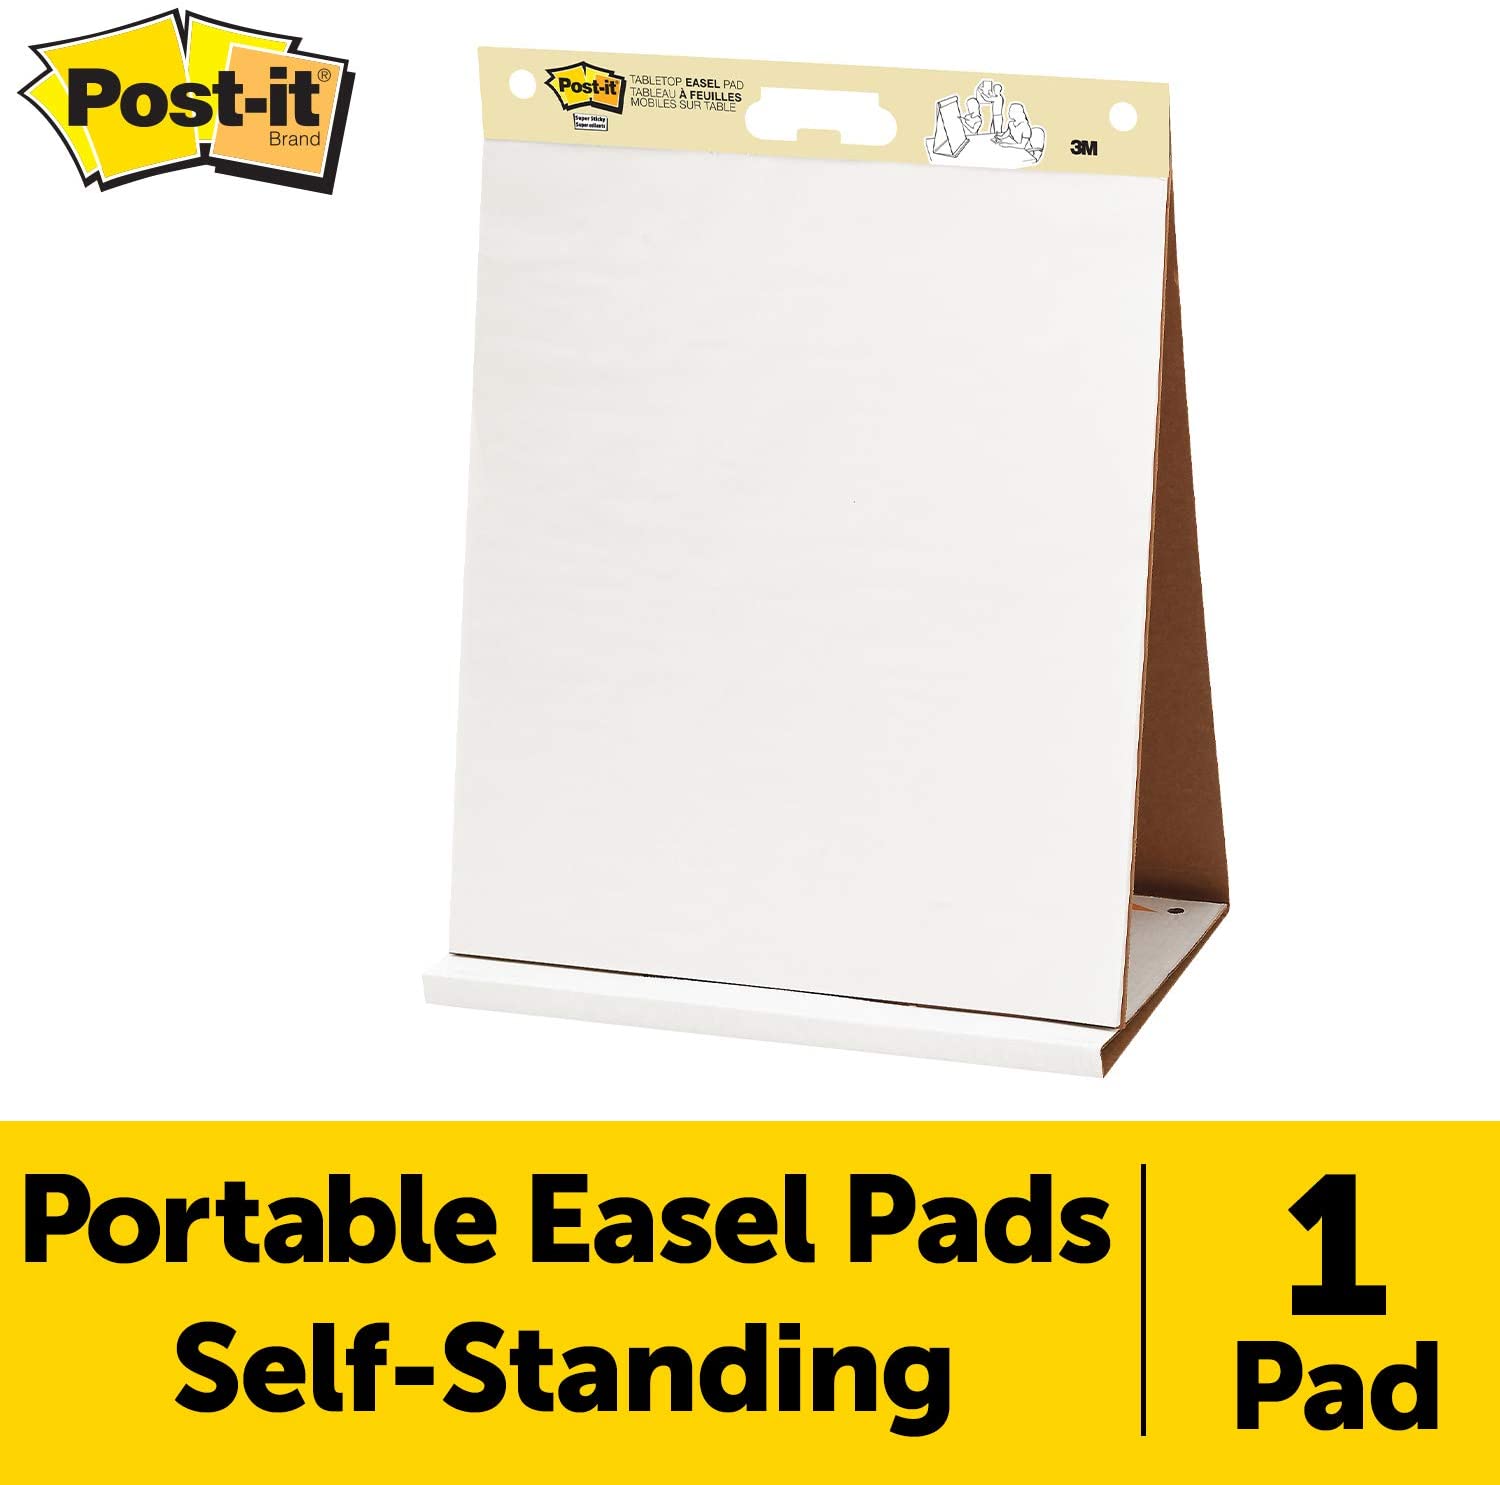 Post-it Self-Stick Easel Pads